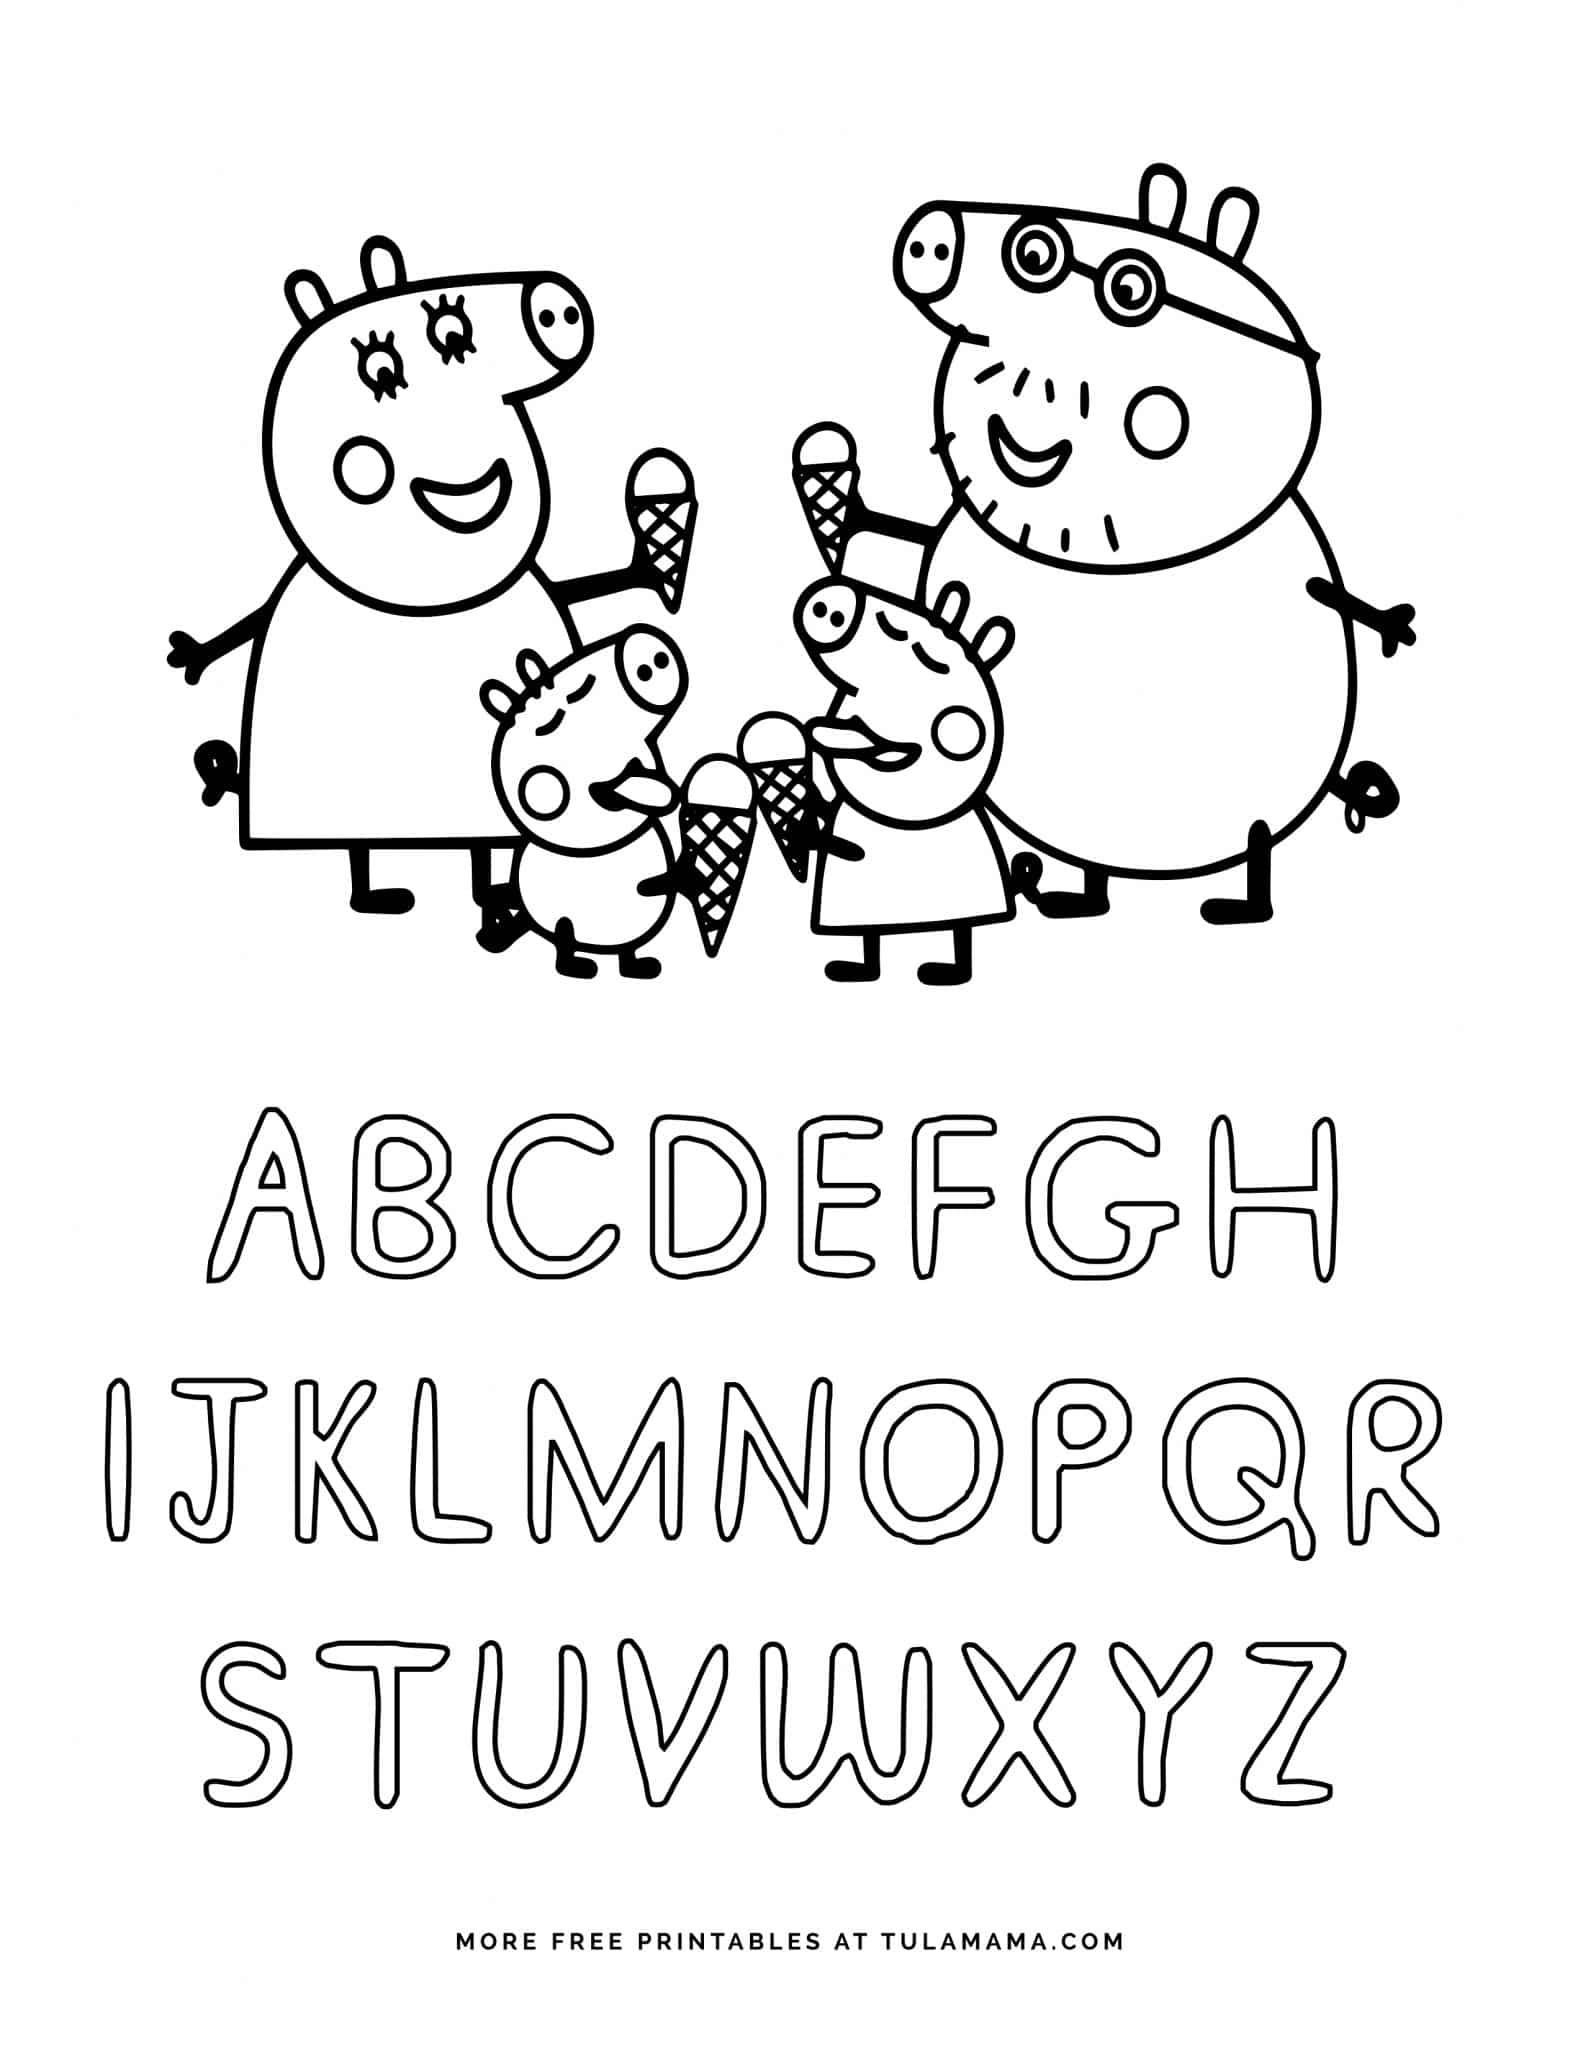 Peppa Pig - ABC Kids